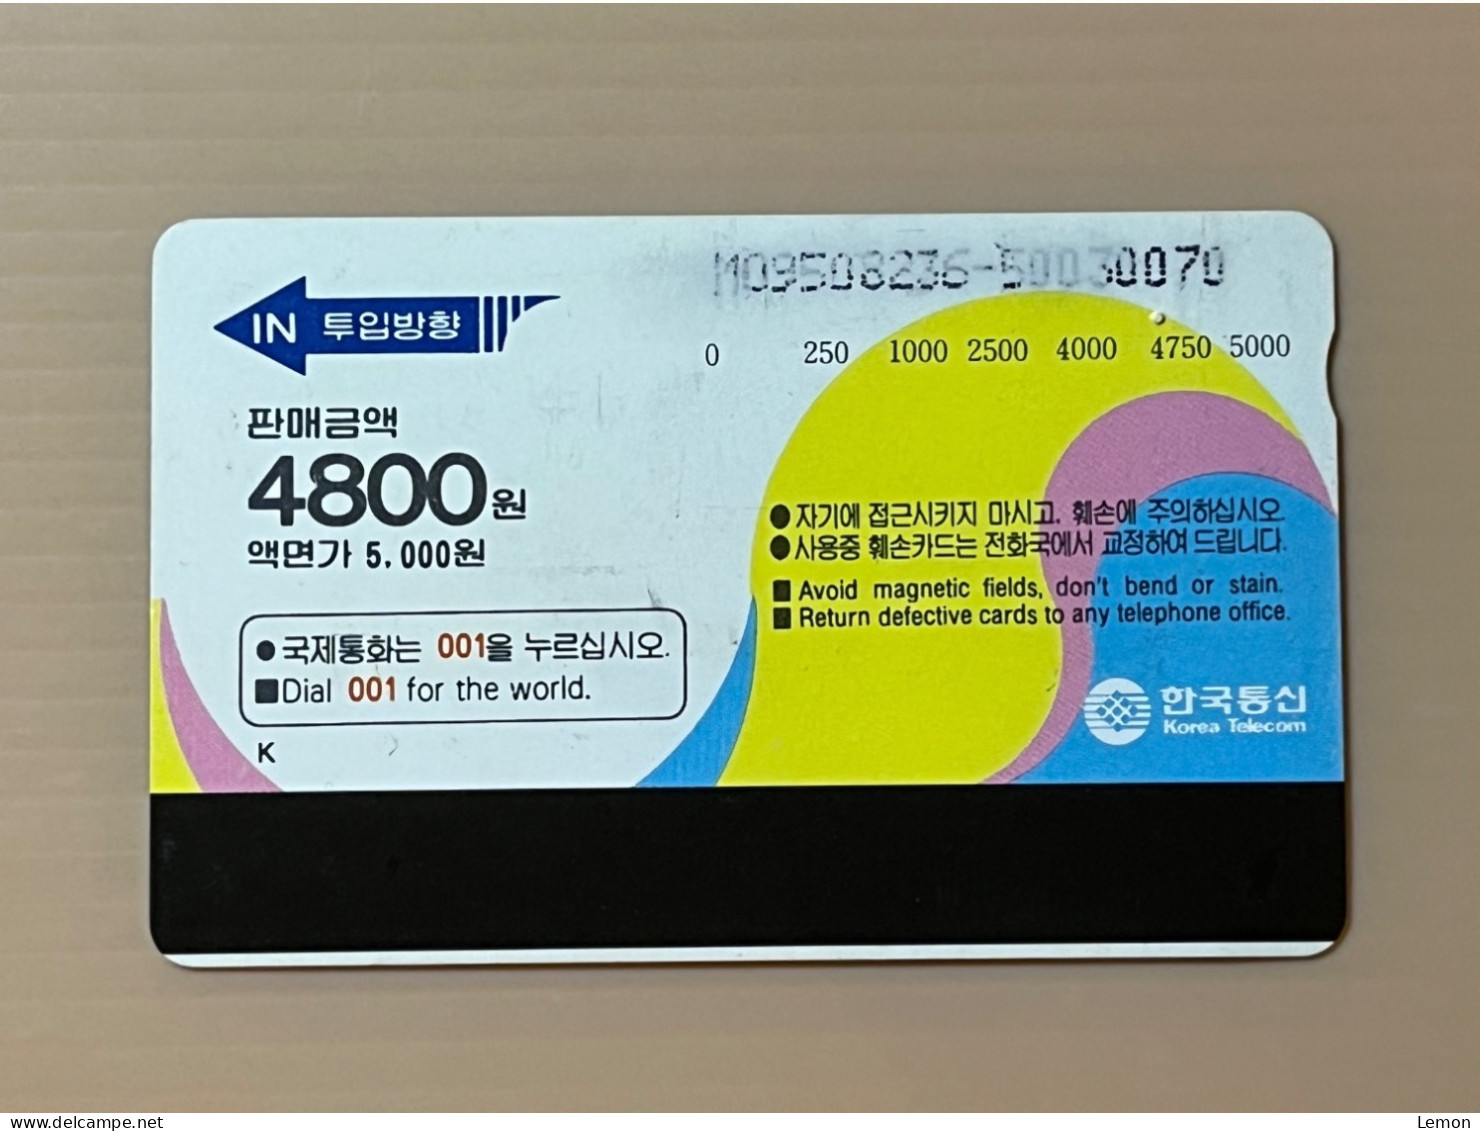 Korea Phonecard, Landscape Mini Waterfall, 1 Used Card - Corée Du Sud